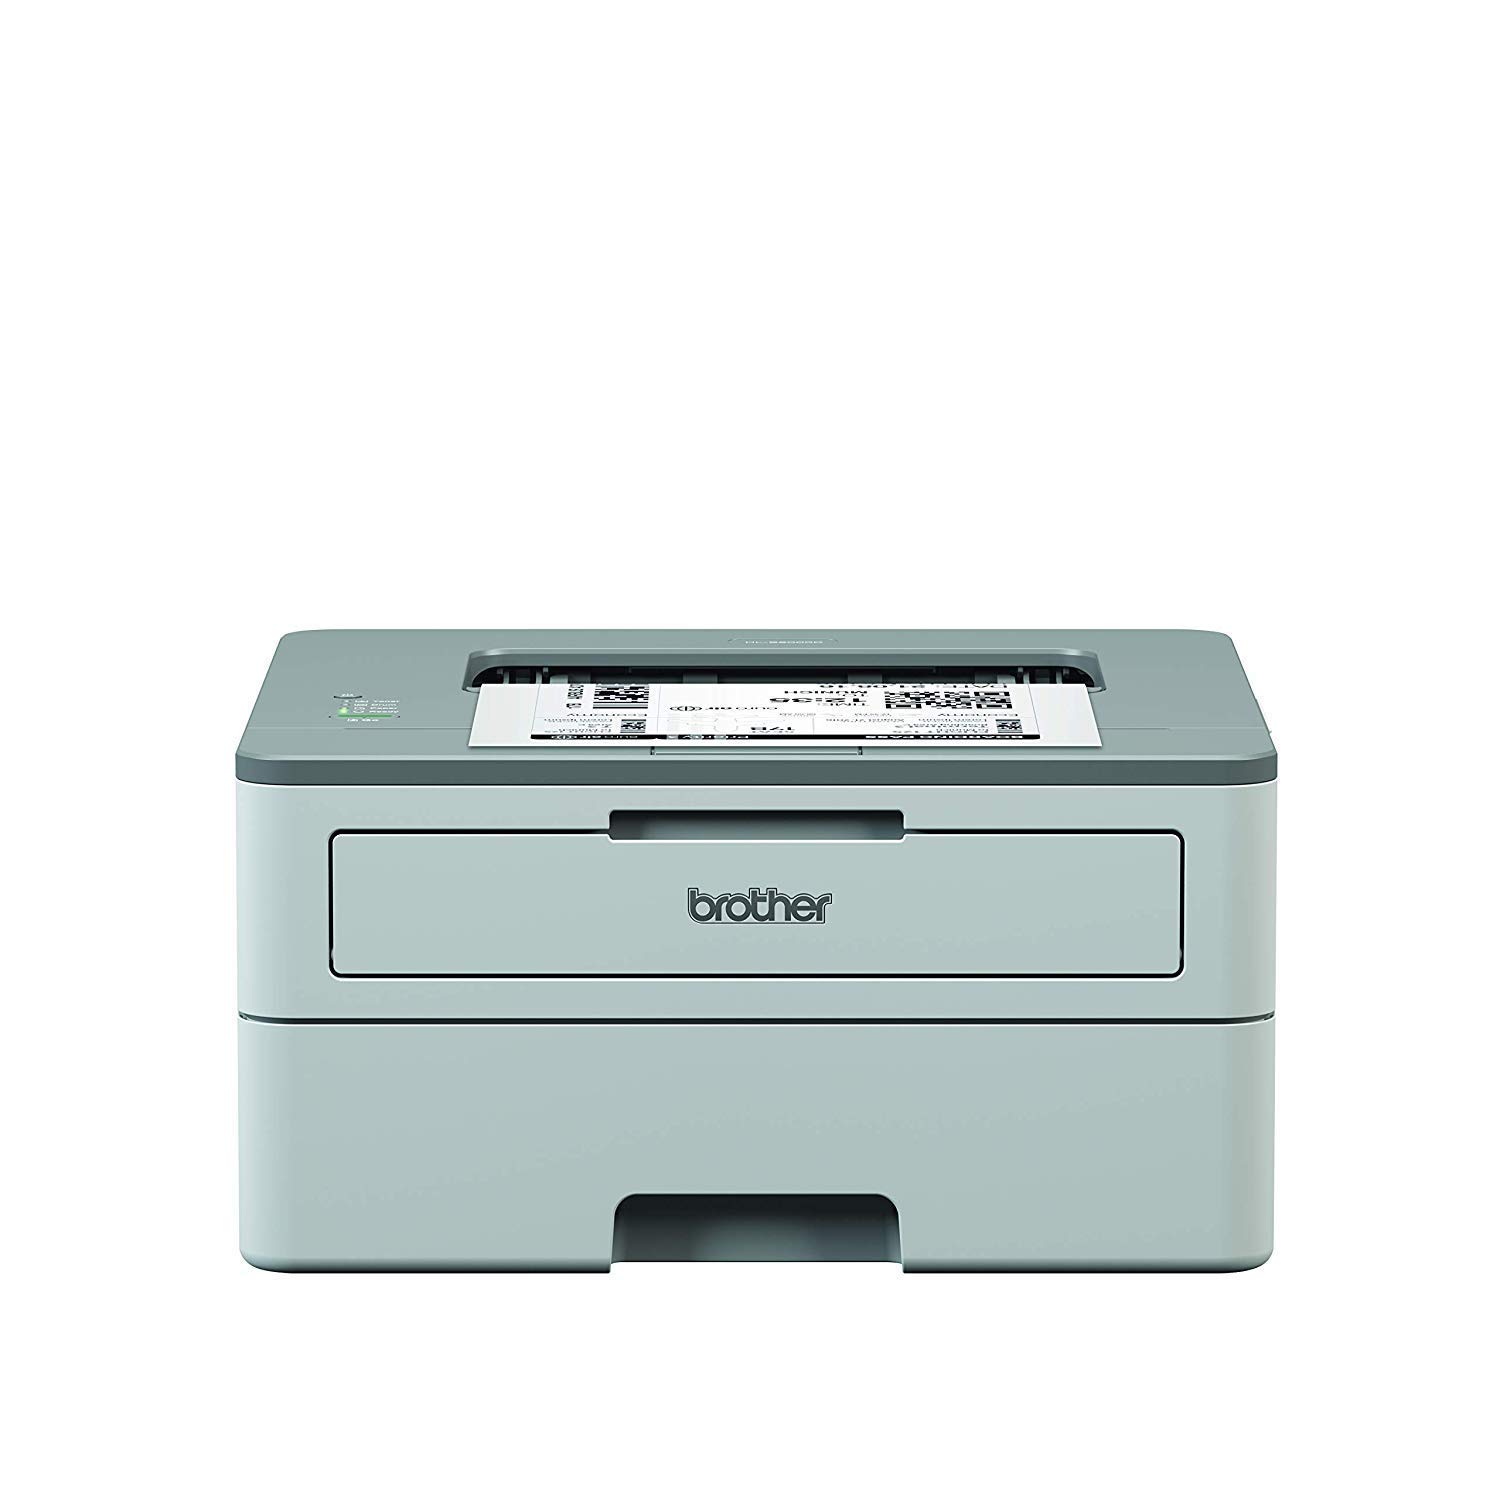 Printer Brother Laser HL-B2000D Mono with Auto Duplex Printing